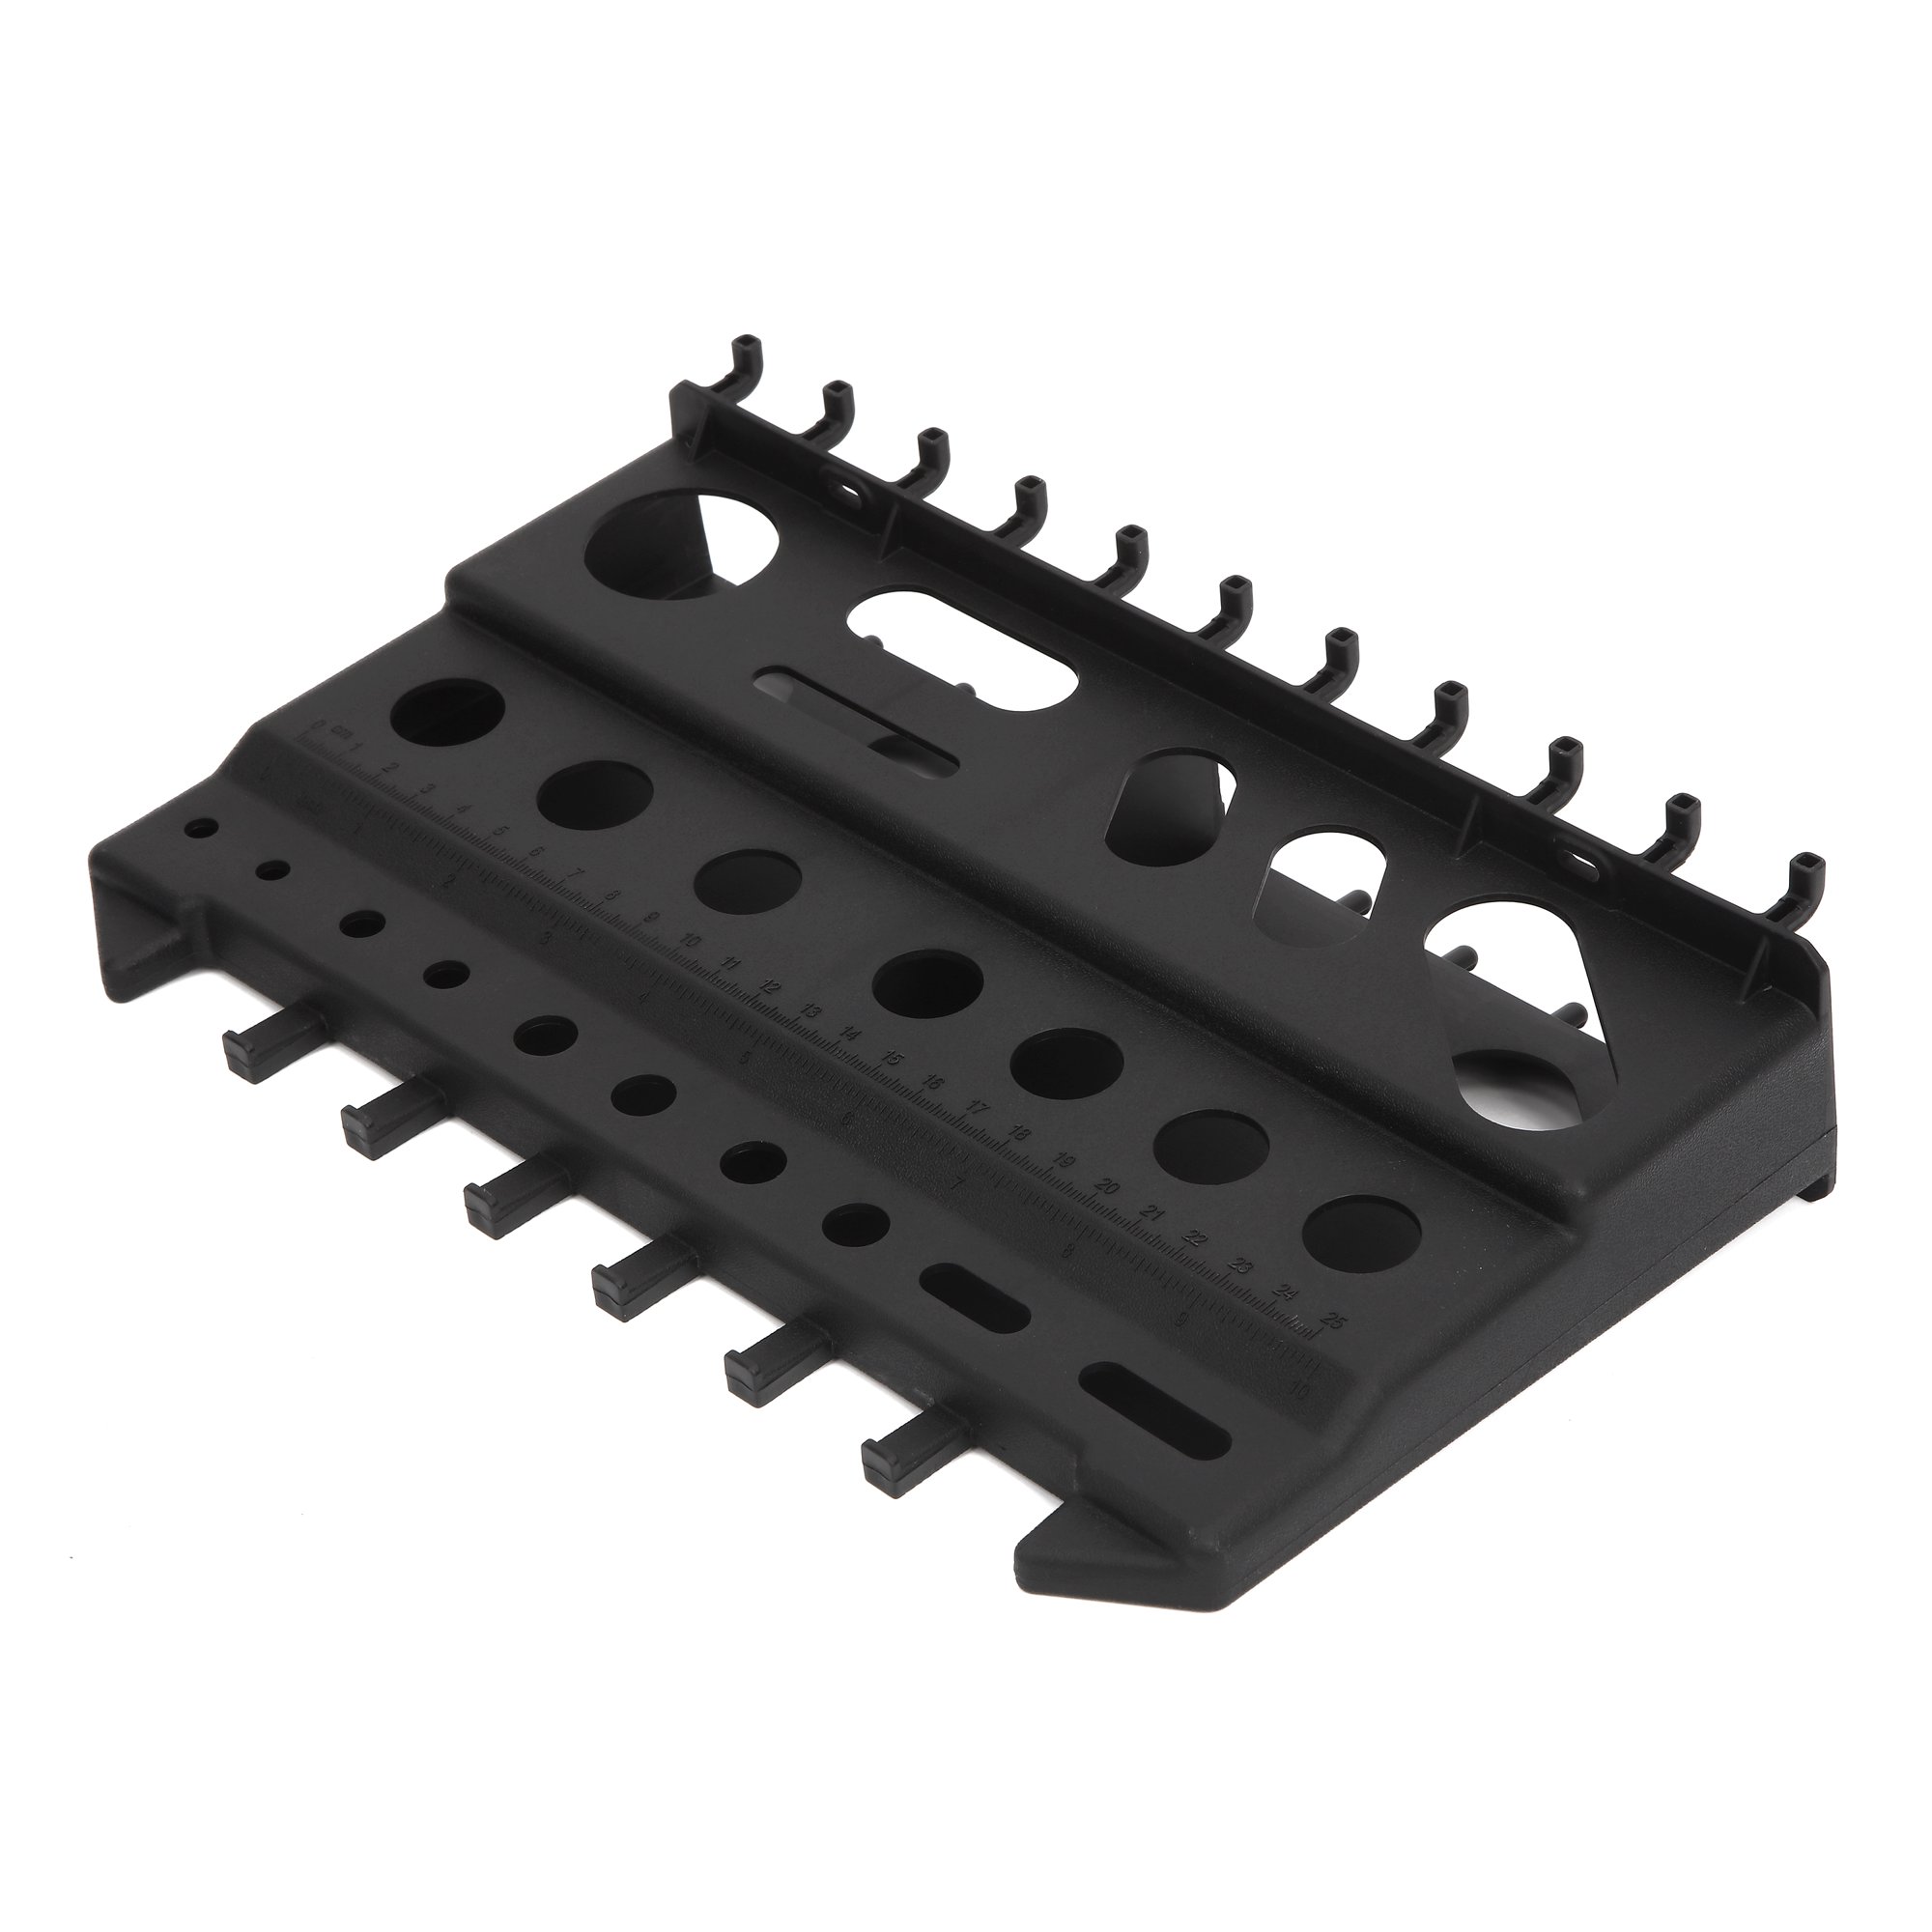 11" Hyper Tough Multi-Tool Plastic Pegboard Tool Tray (Black) $1.97 or 11-Piece Pegboard Kit (Black Steel) $12.65 + Free S&H w/ Walmart+ or $35+